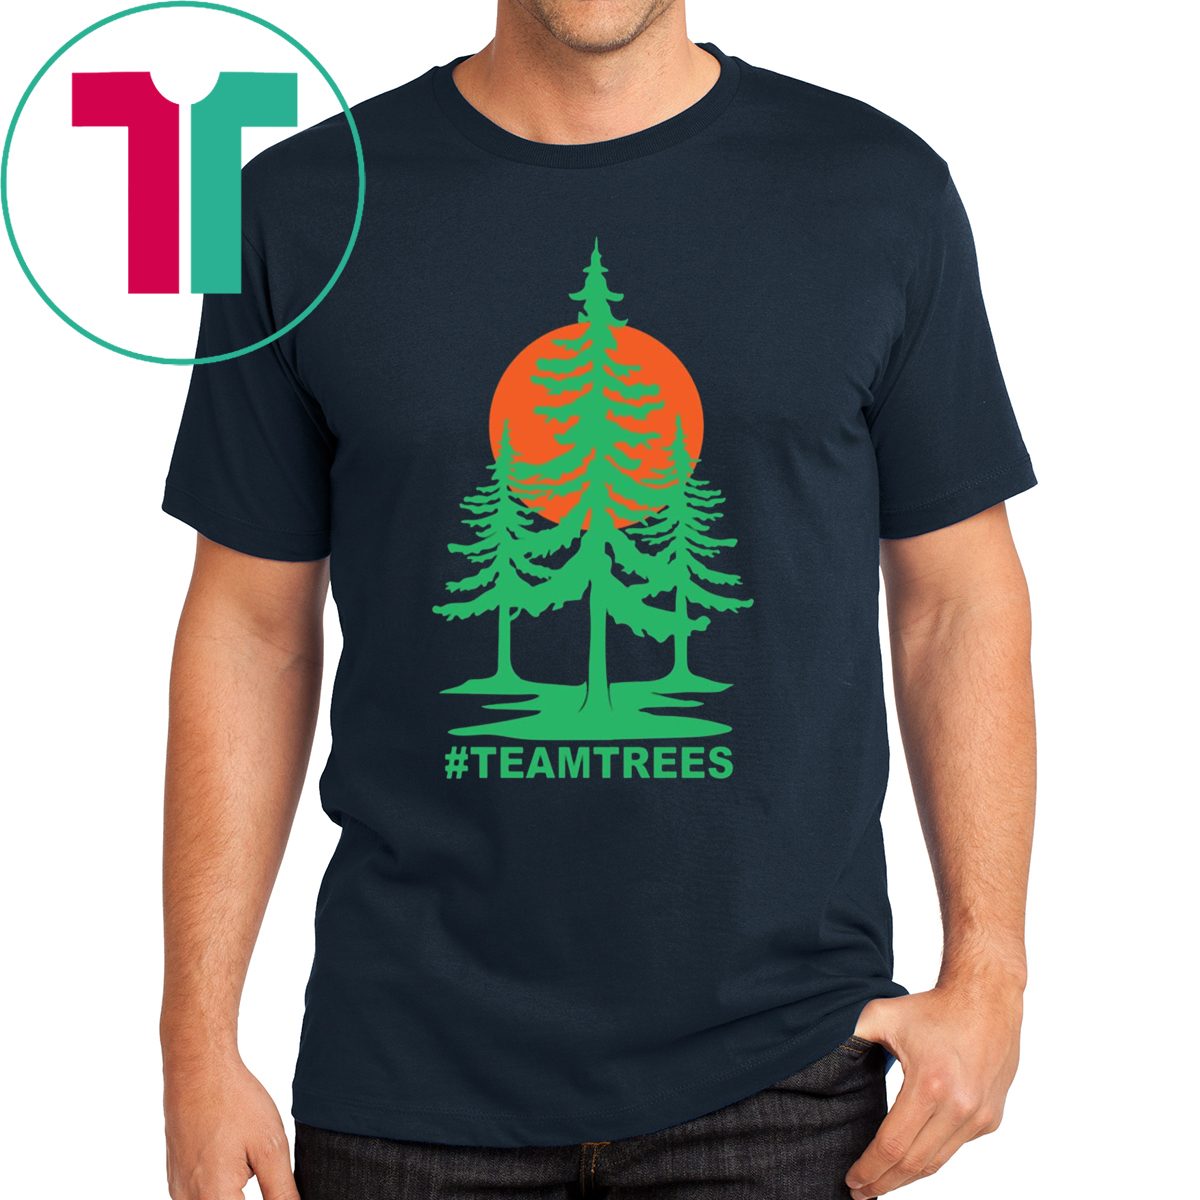 Mr Beast Team Trees T-Shirts - OrderQuilt.com